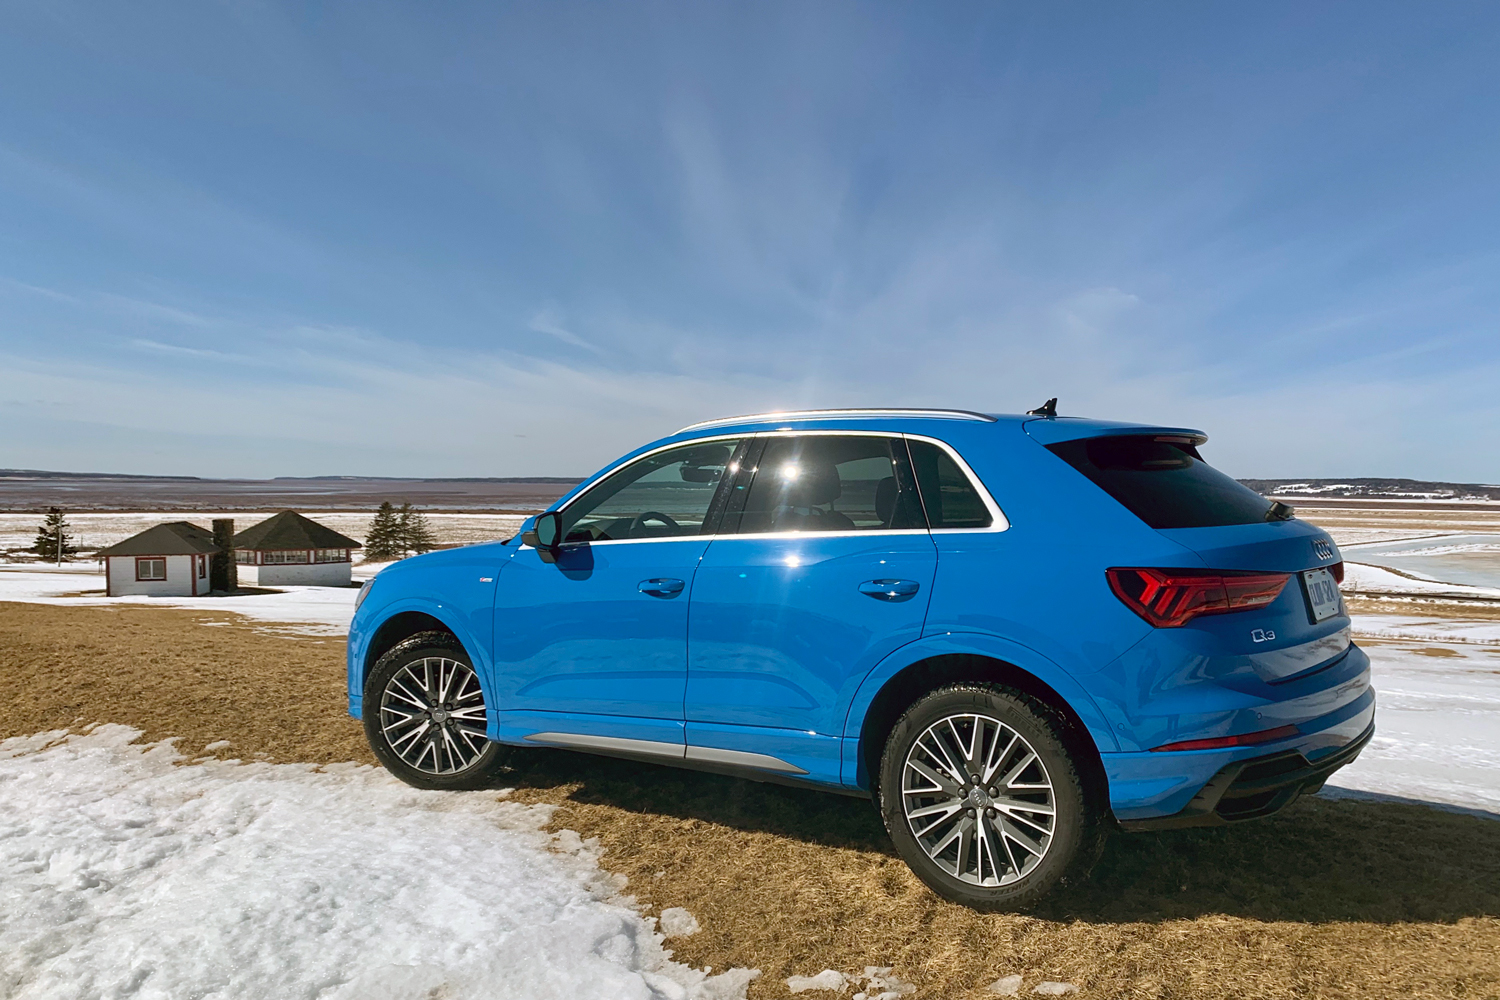 2019 Audi Q3 Premium Plus Review: What We Were Waiting For